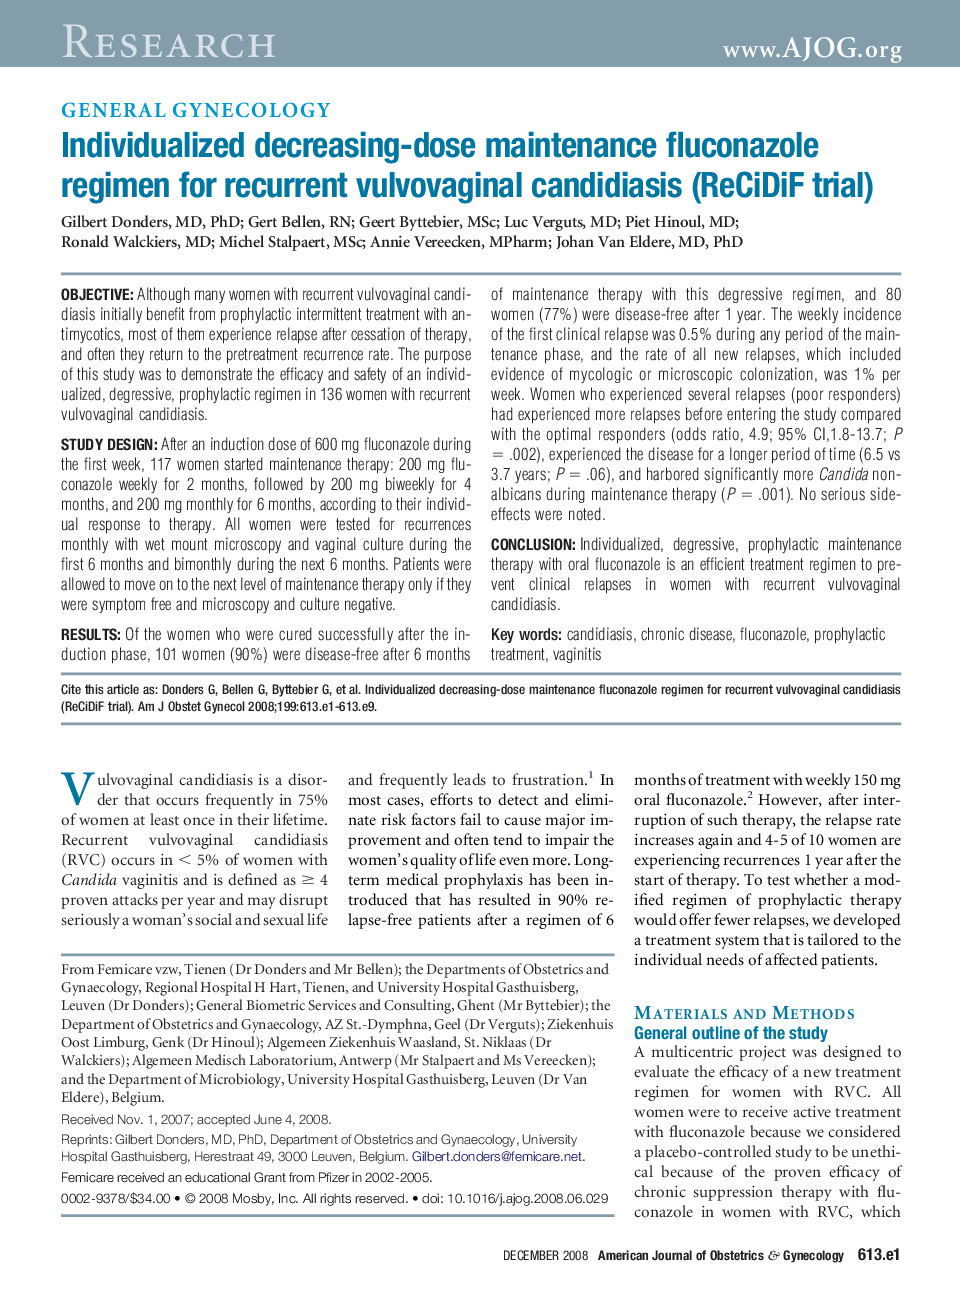 Individualized decreasing-dose maintenance fluconazole regimen for recurrent vulvovaginal candidiasis (ReCiDiF trial)